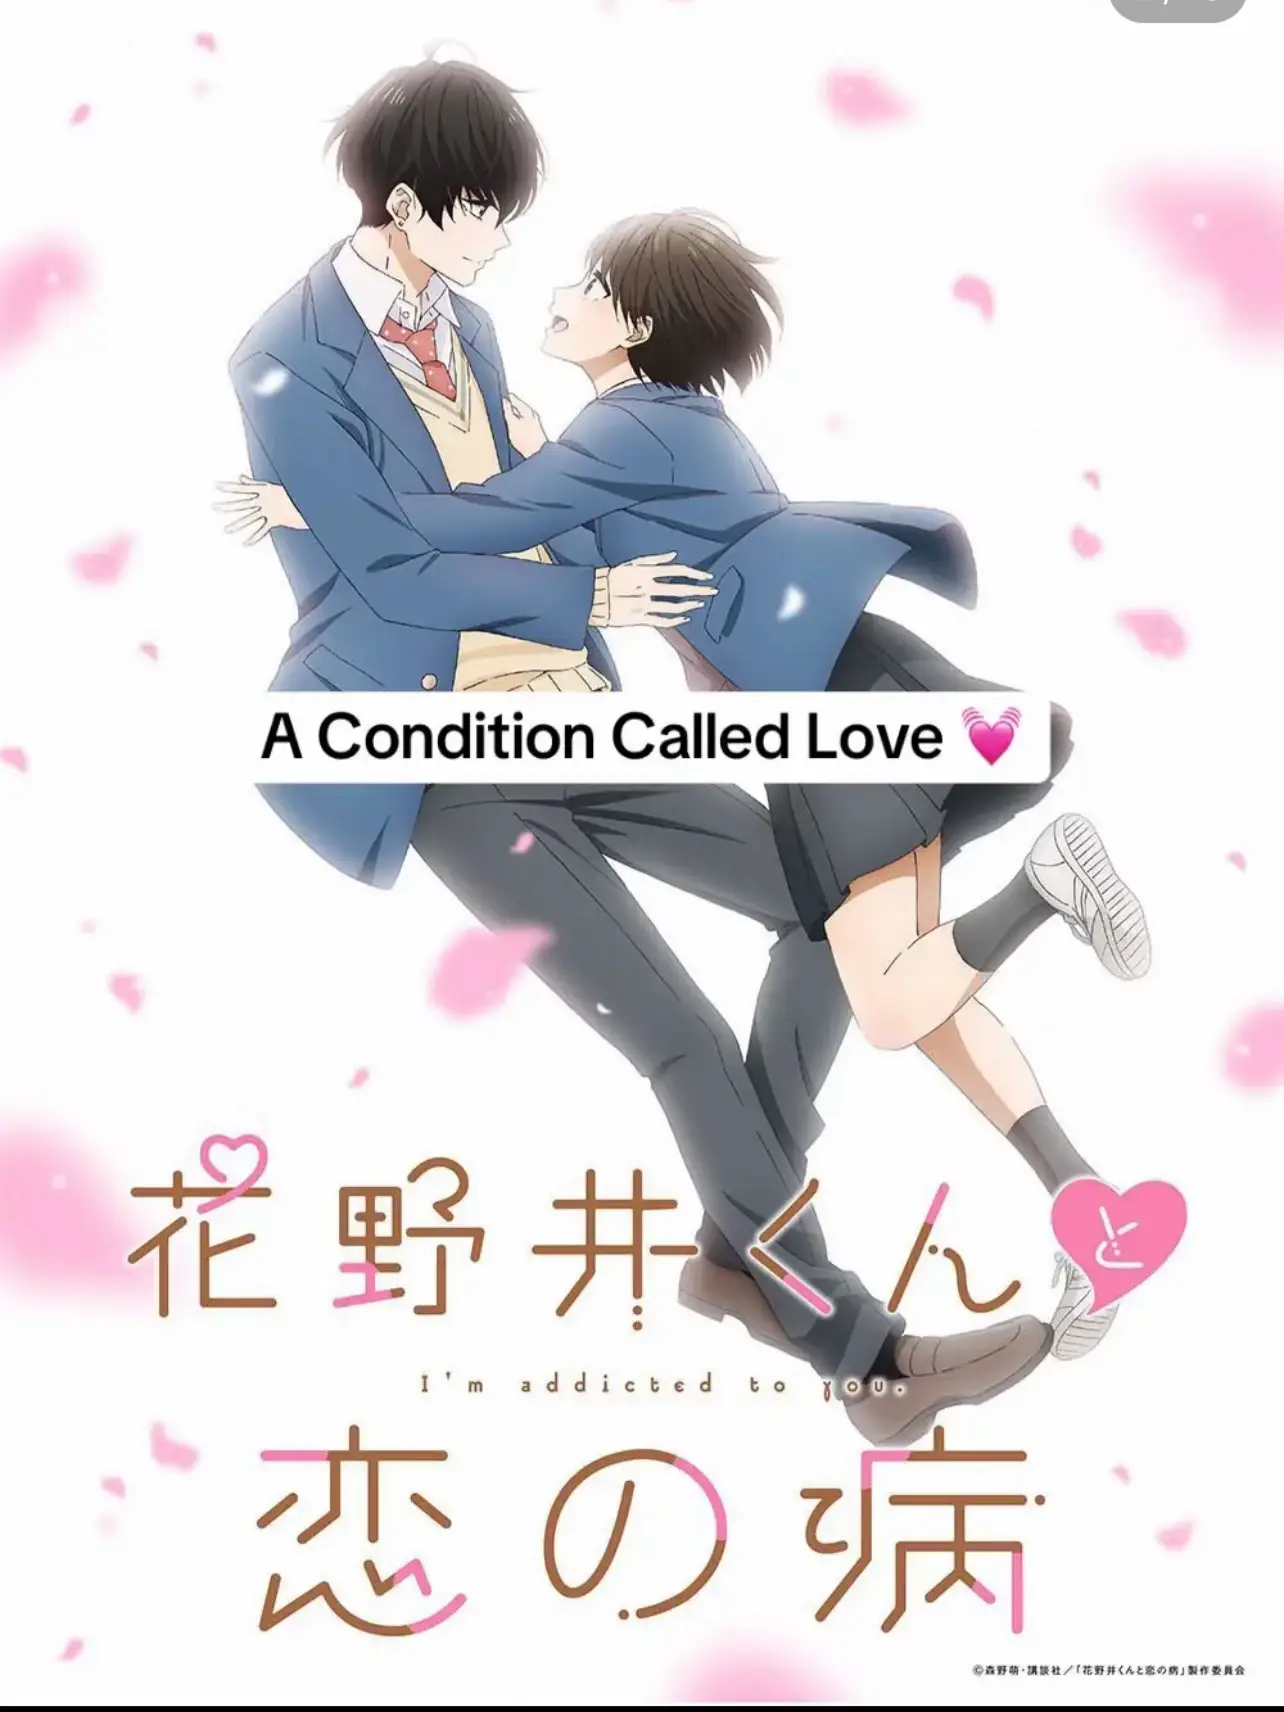 Crunchyroll on Instagram: Kaguya-sama: Love is War -Ultra Romantic- airs  TODAY! 🥰💖